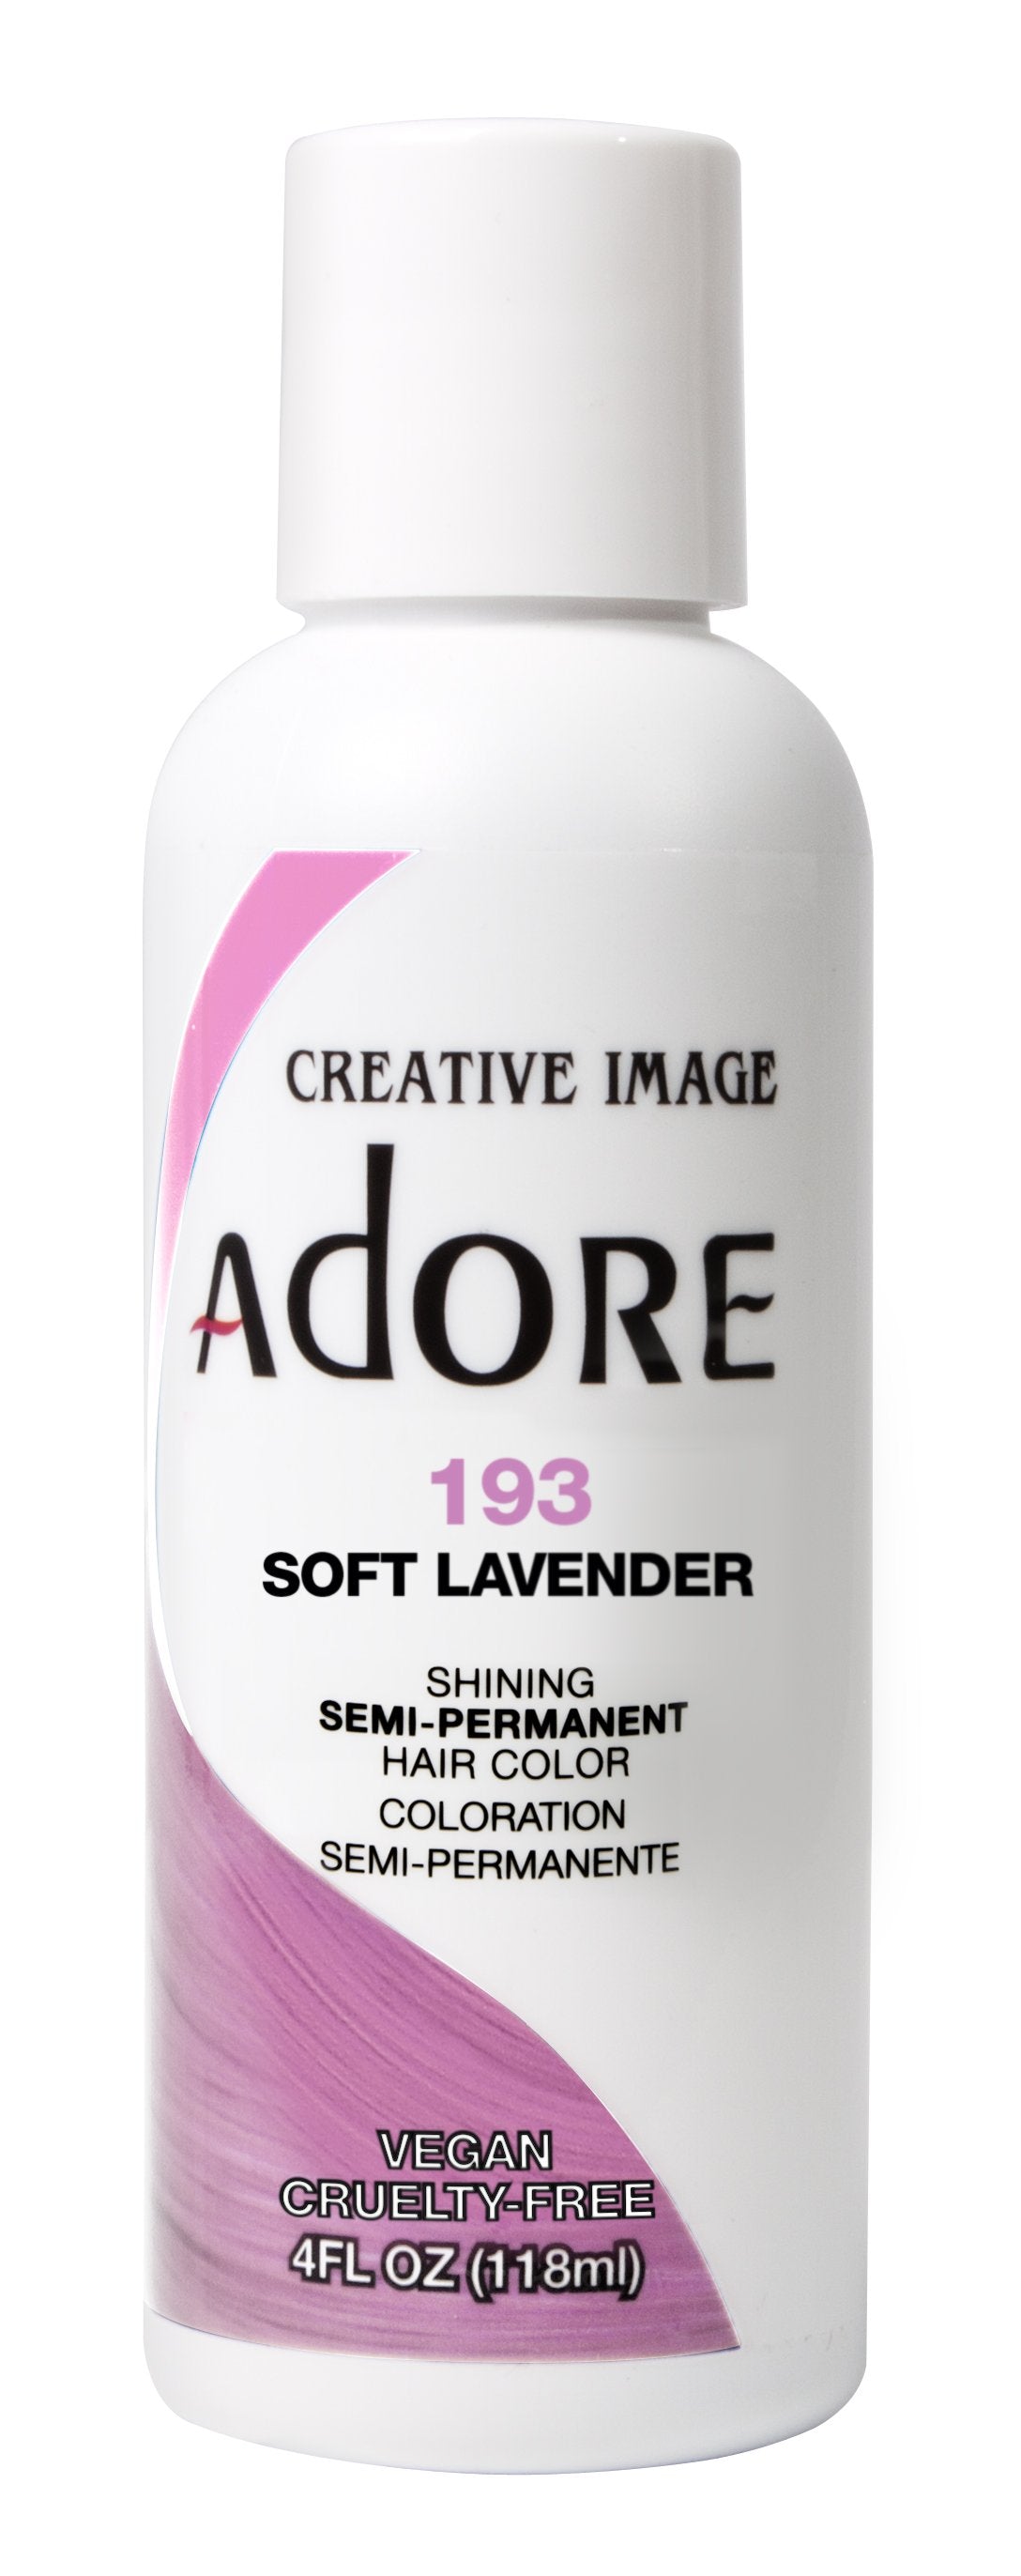 Adore #193 Soft Lavender